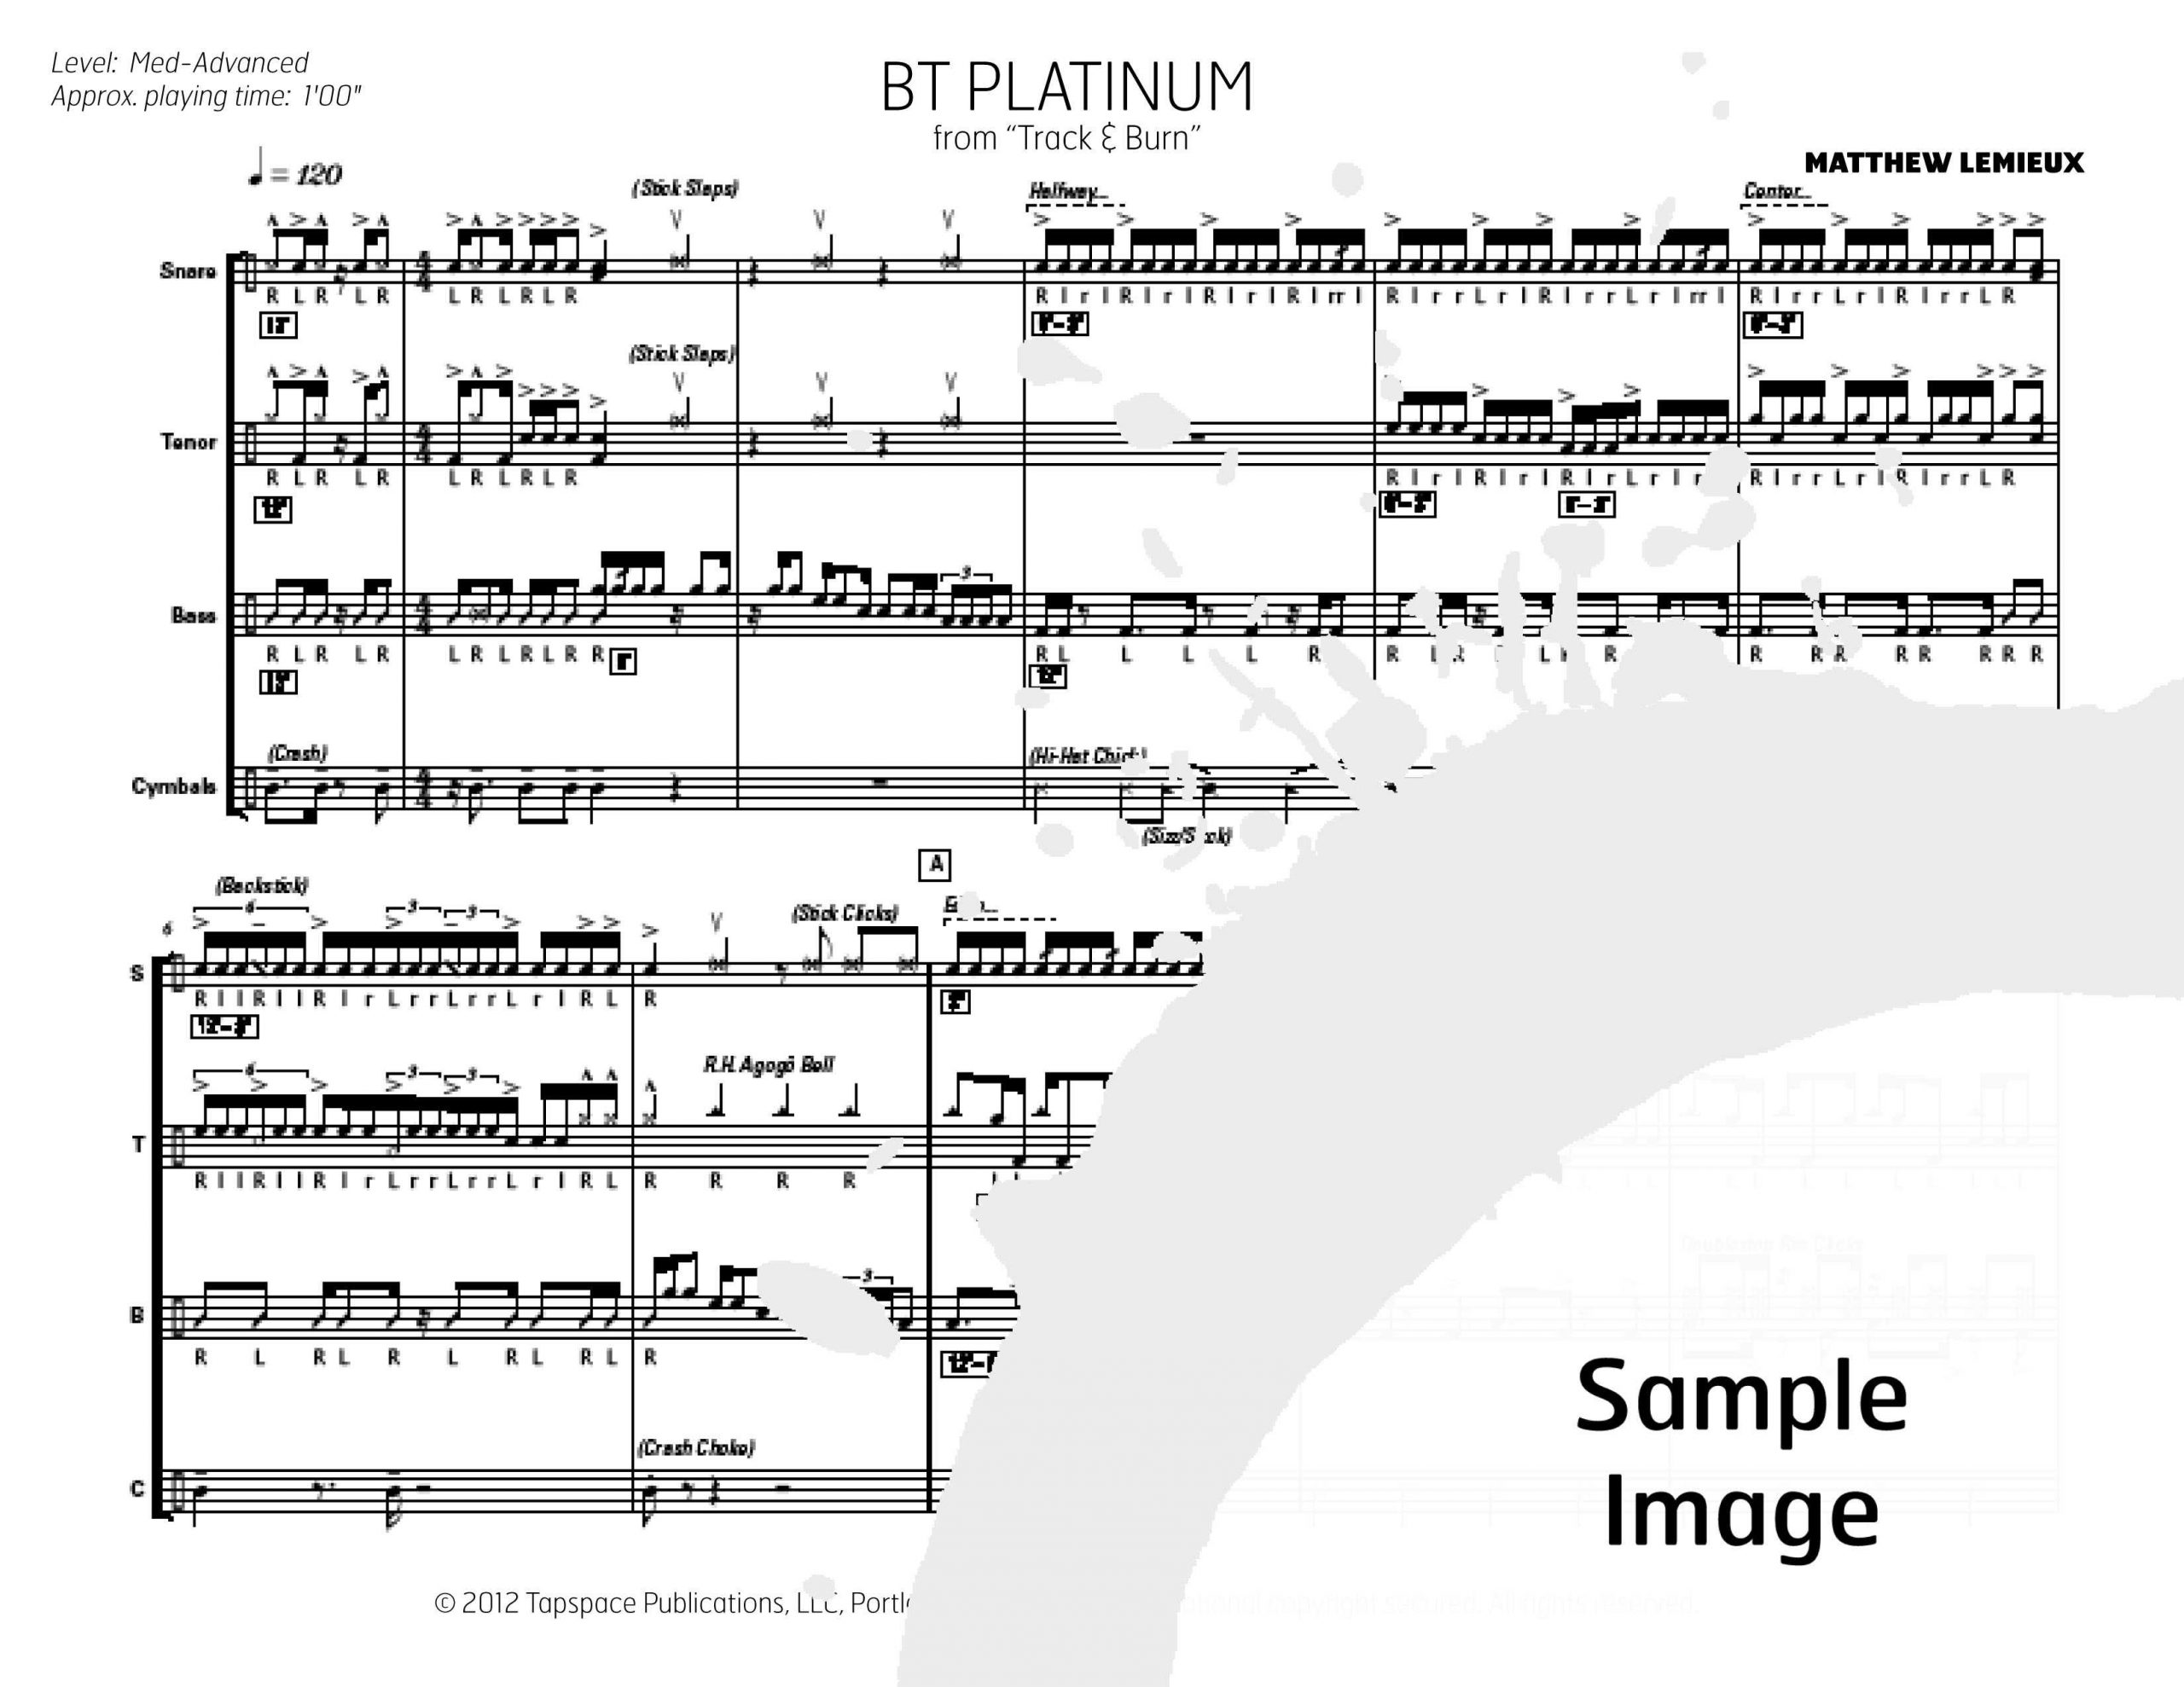 BT Platinum by Matthew Lemieux